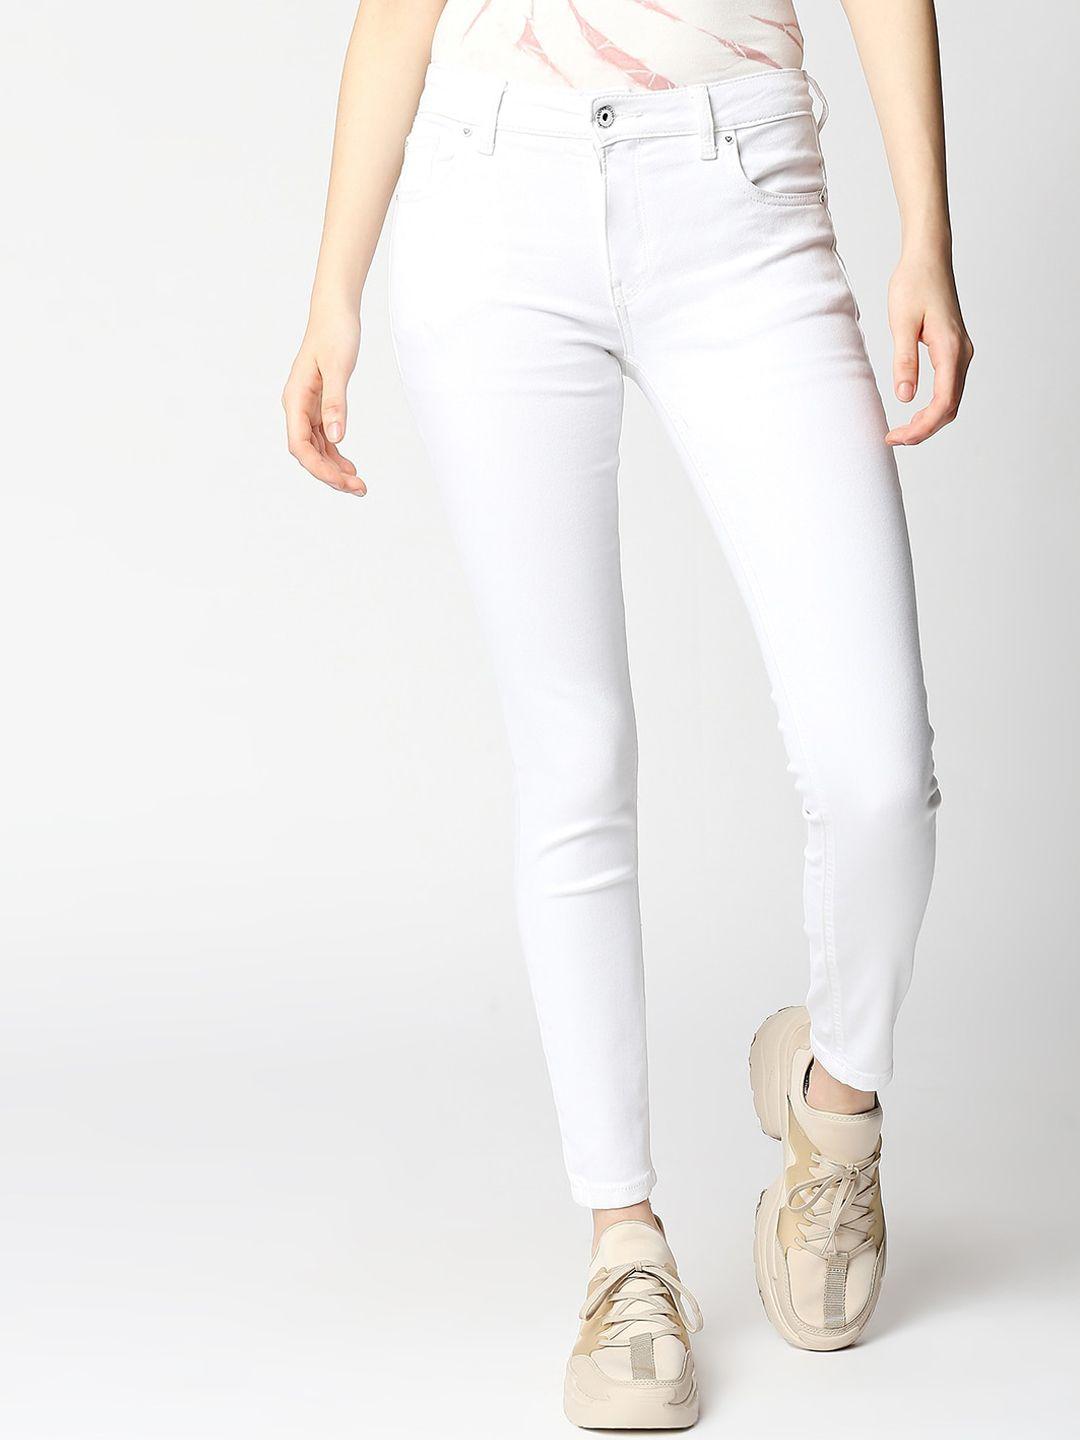 lovegen women white comfort skinny fit stretchable jeans